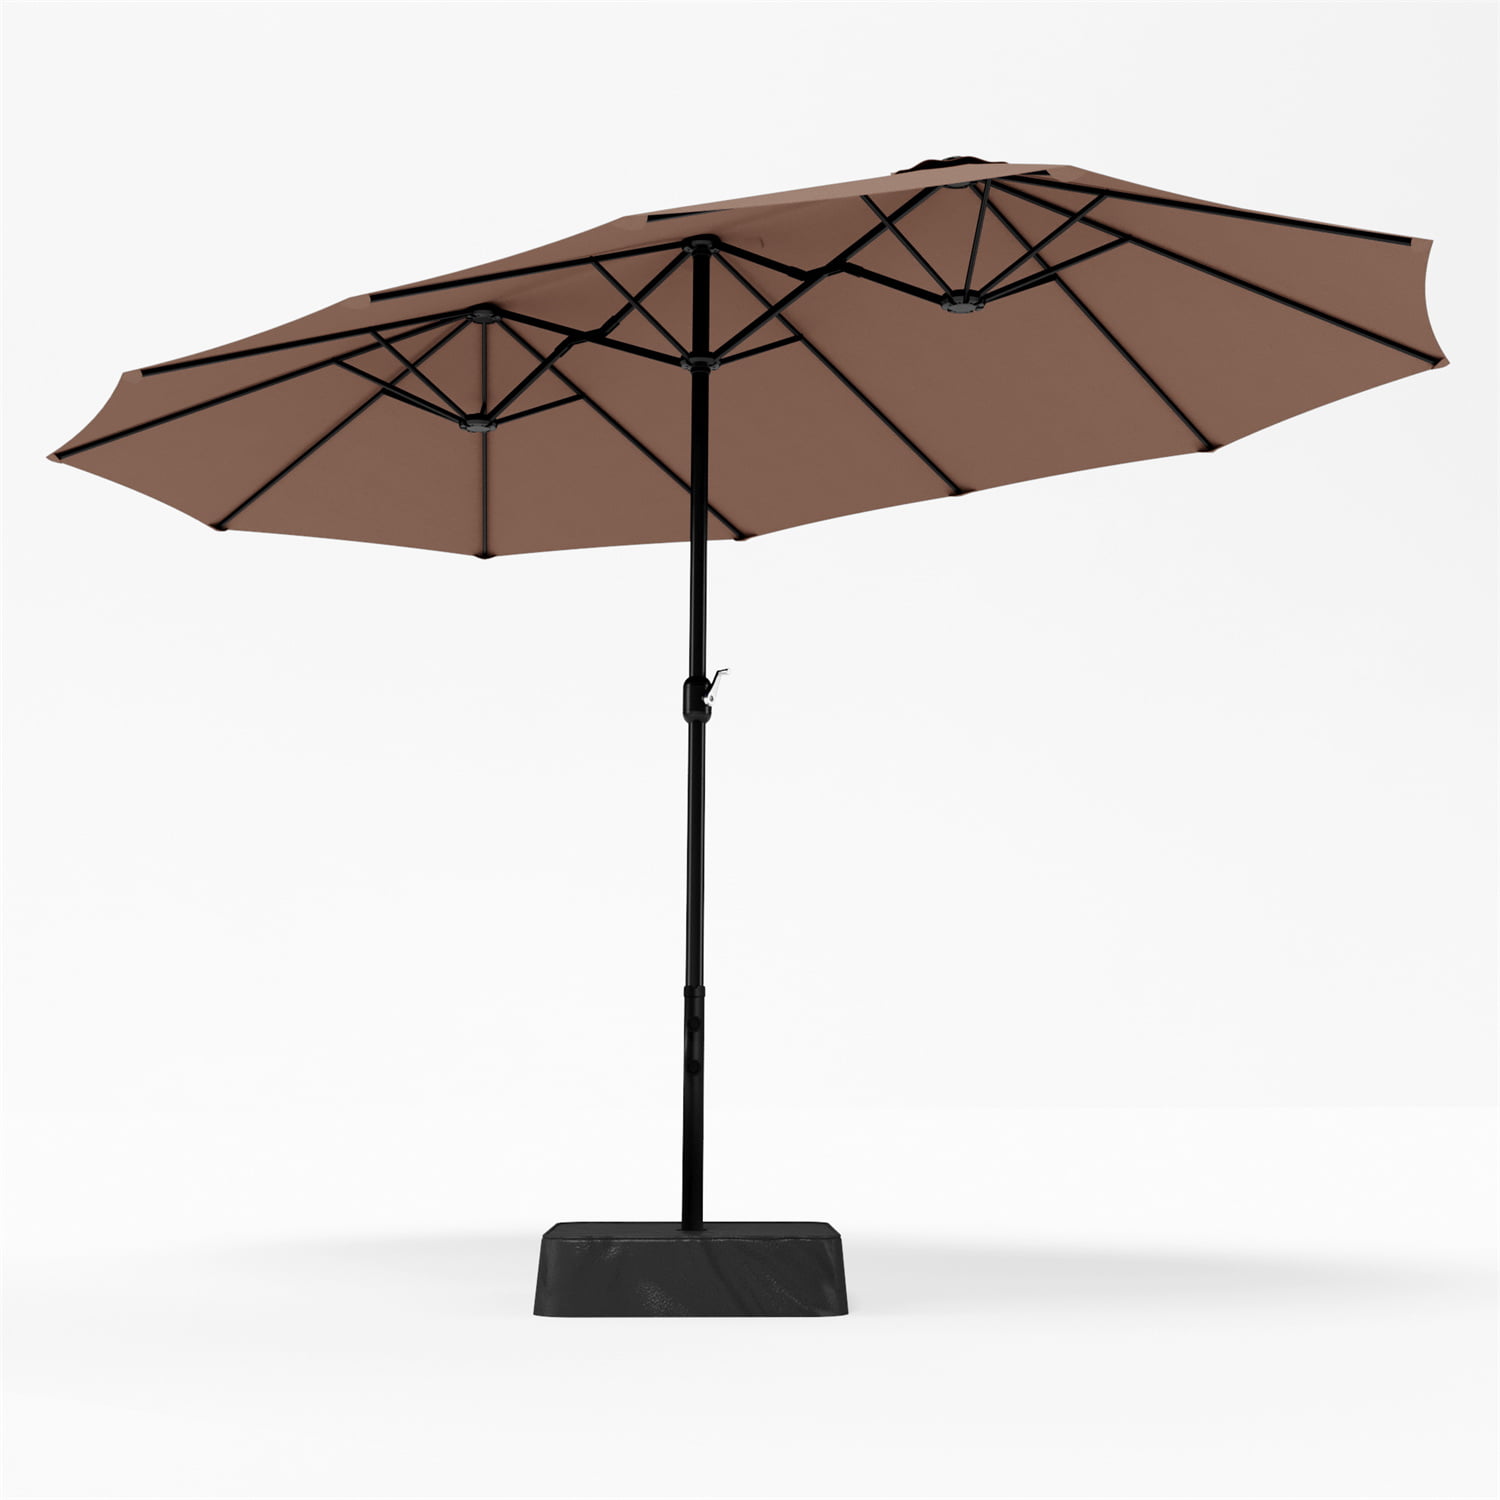 Star Wars Star Wars Umbrellas Bags & Accessories Synthetic Material Umbrellas Black & Red